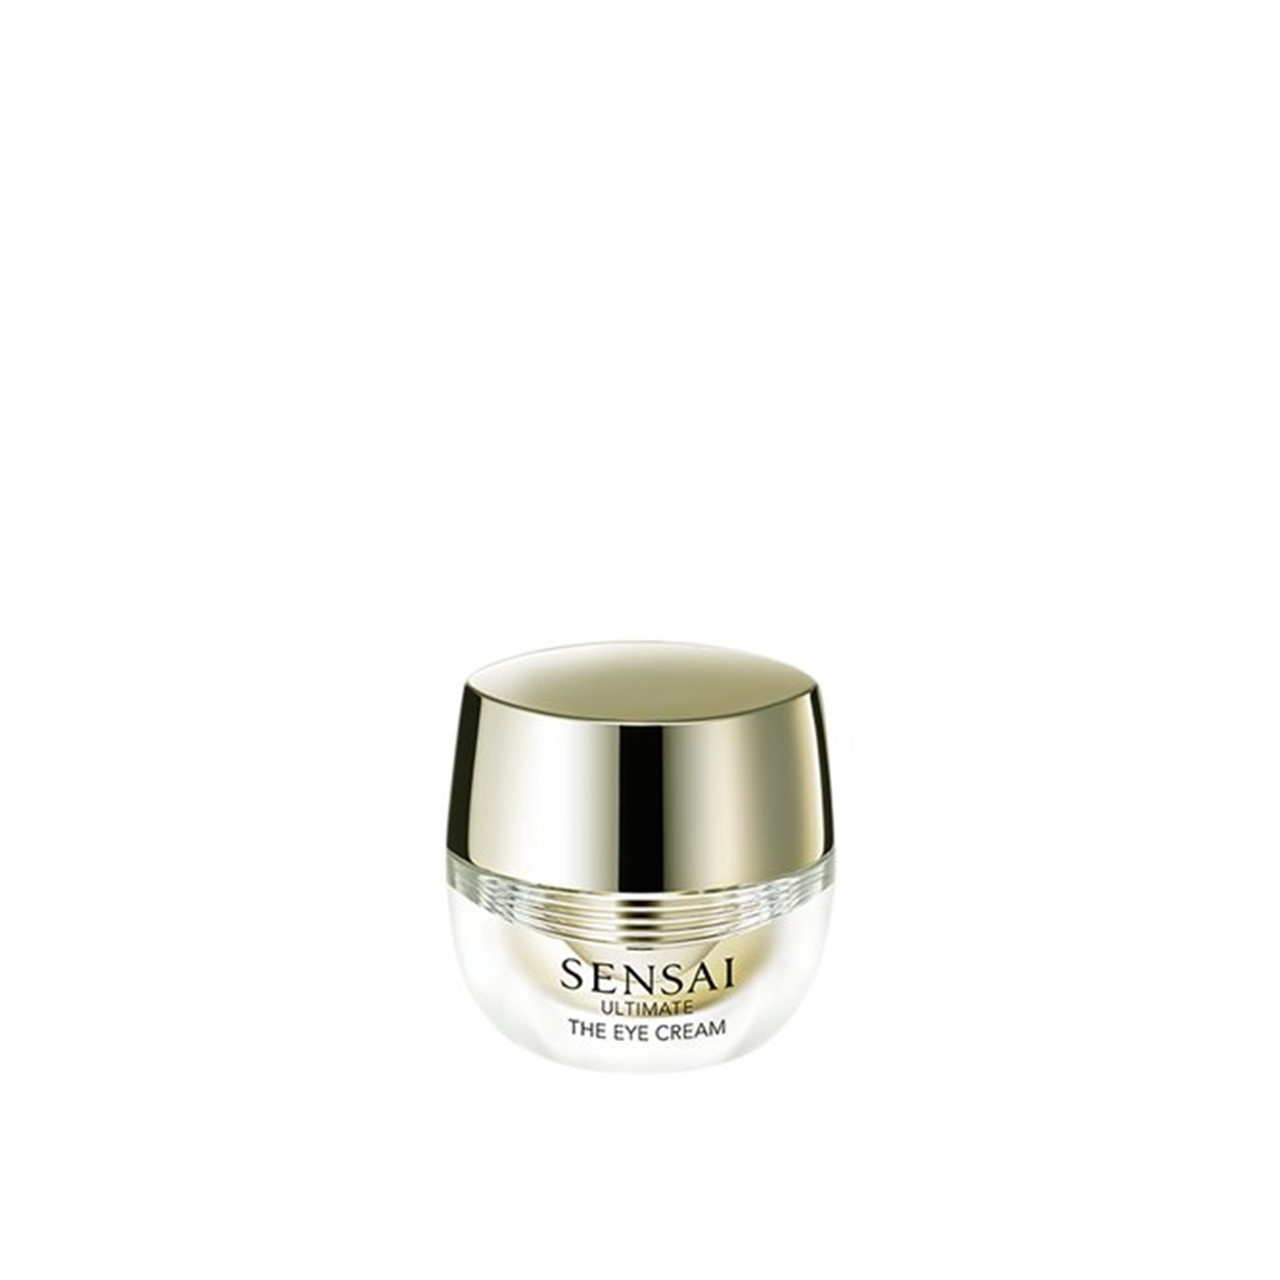 SENSAI Ultimate The Eye Cream 15ml (0.52 oz)